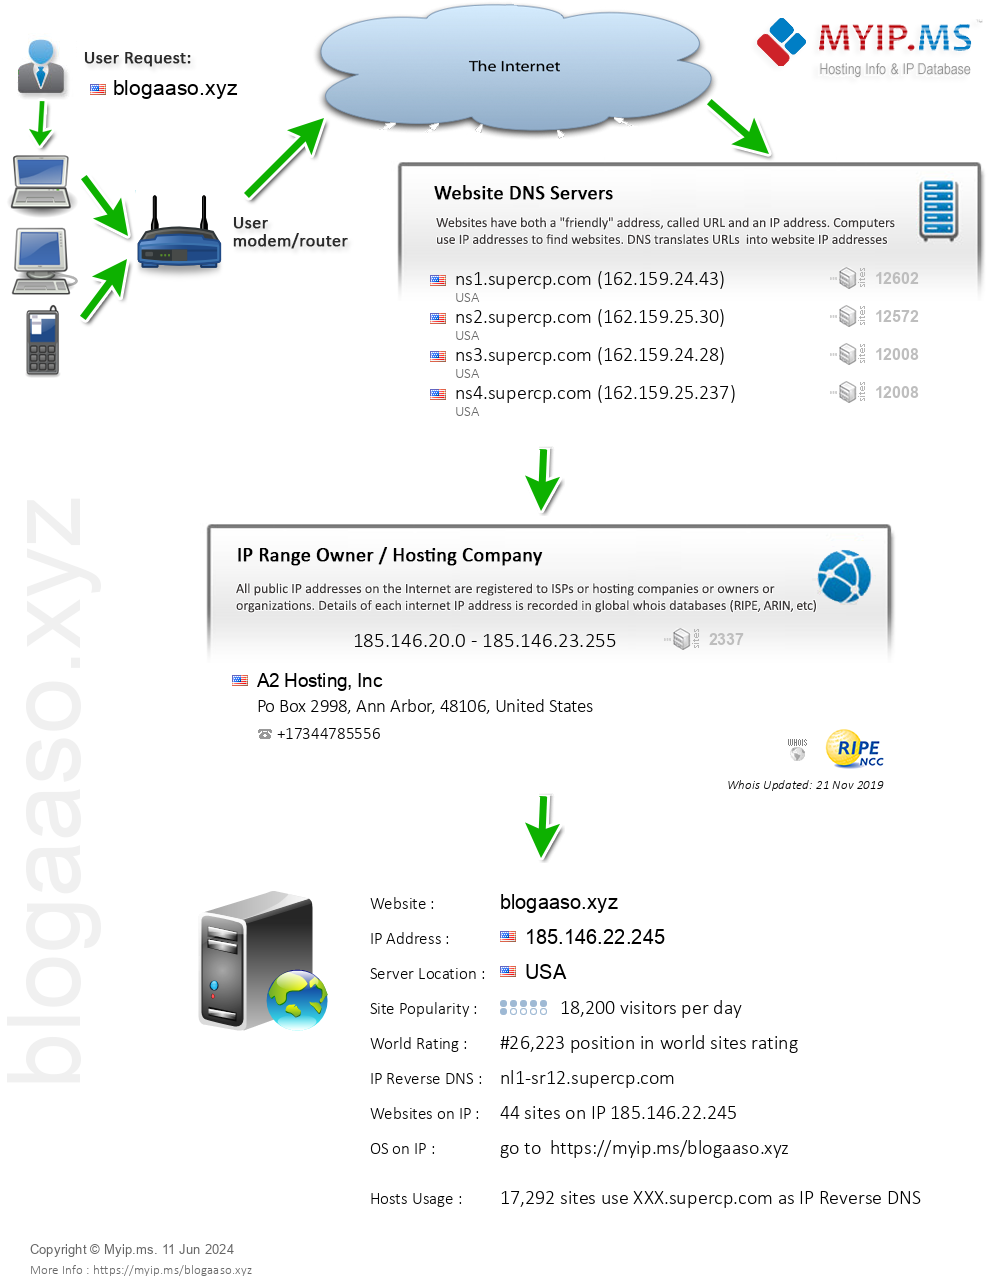 Blogaaso.xyz - Website Hosting Visual IP Diagram